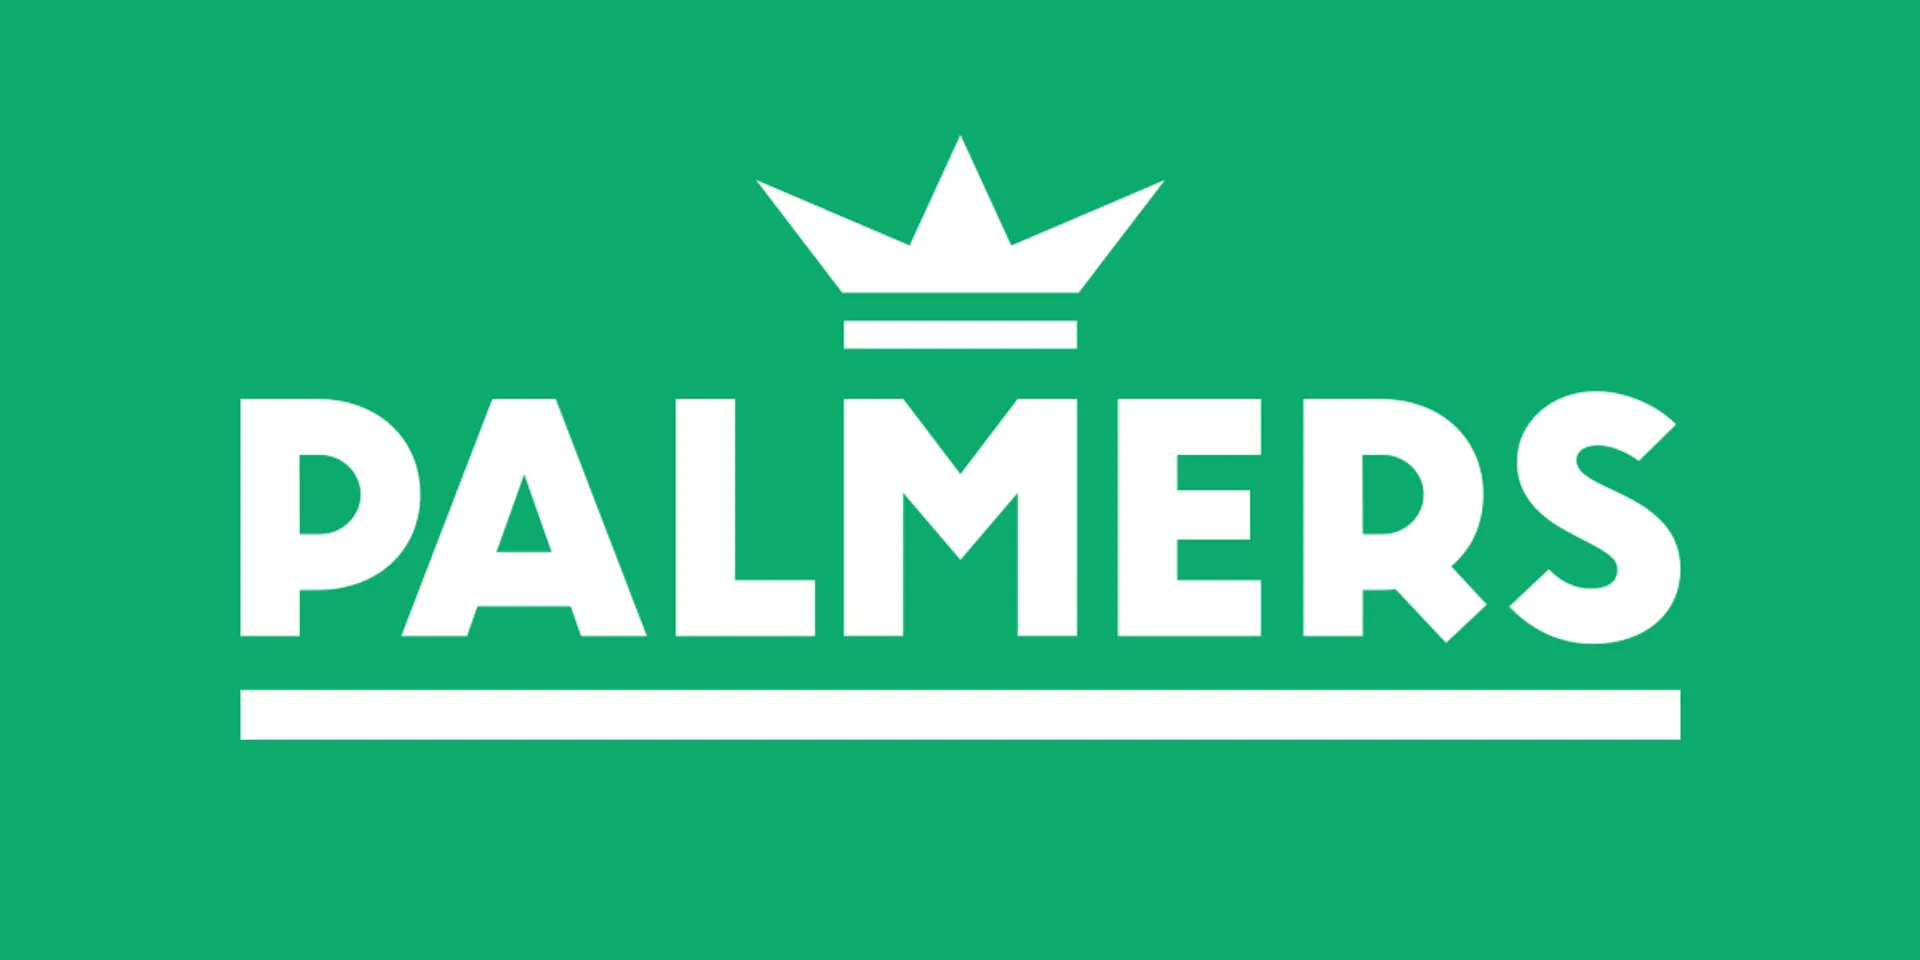 PALMERS logo